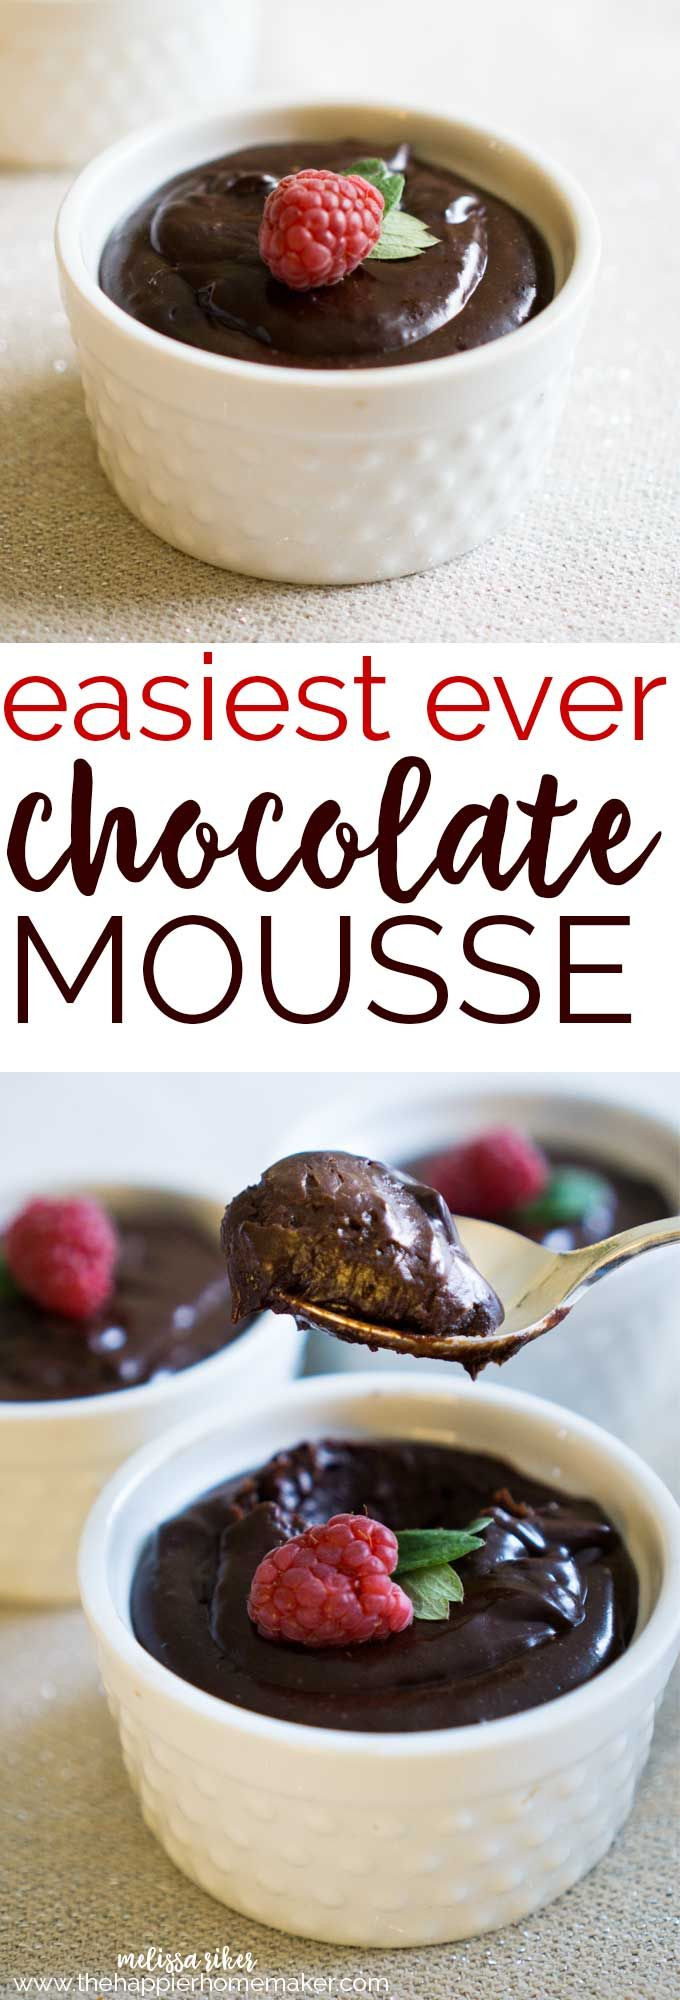 Choc Mousse No Eggs
 Easy Chocolate Mousse No Eggs Recipe